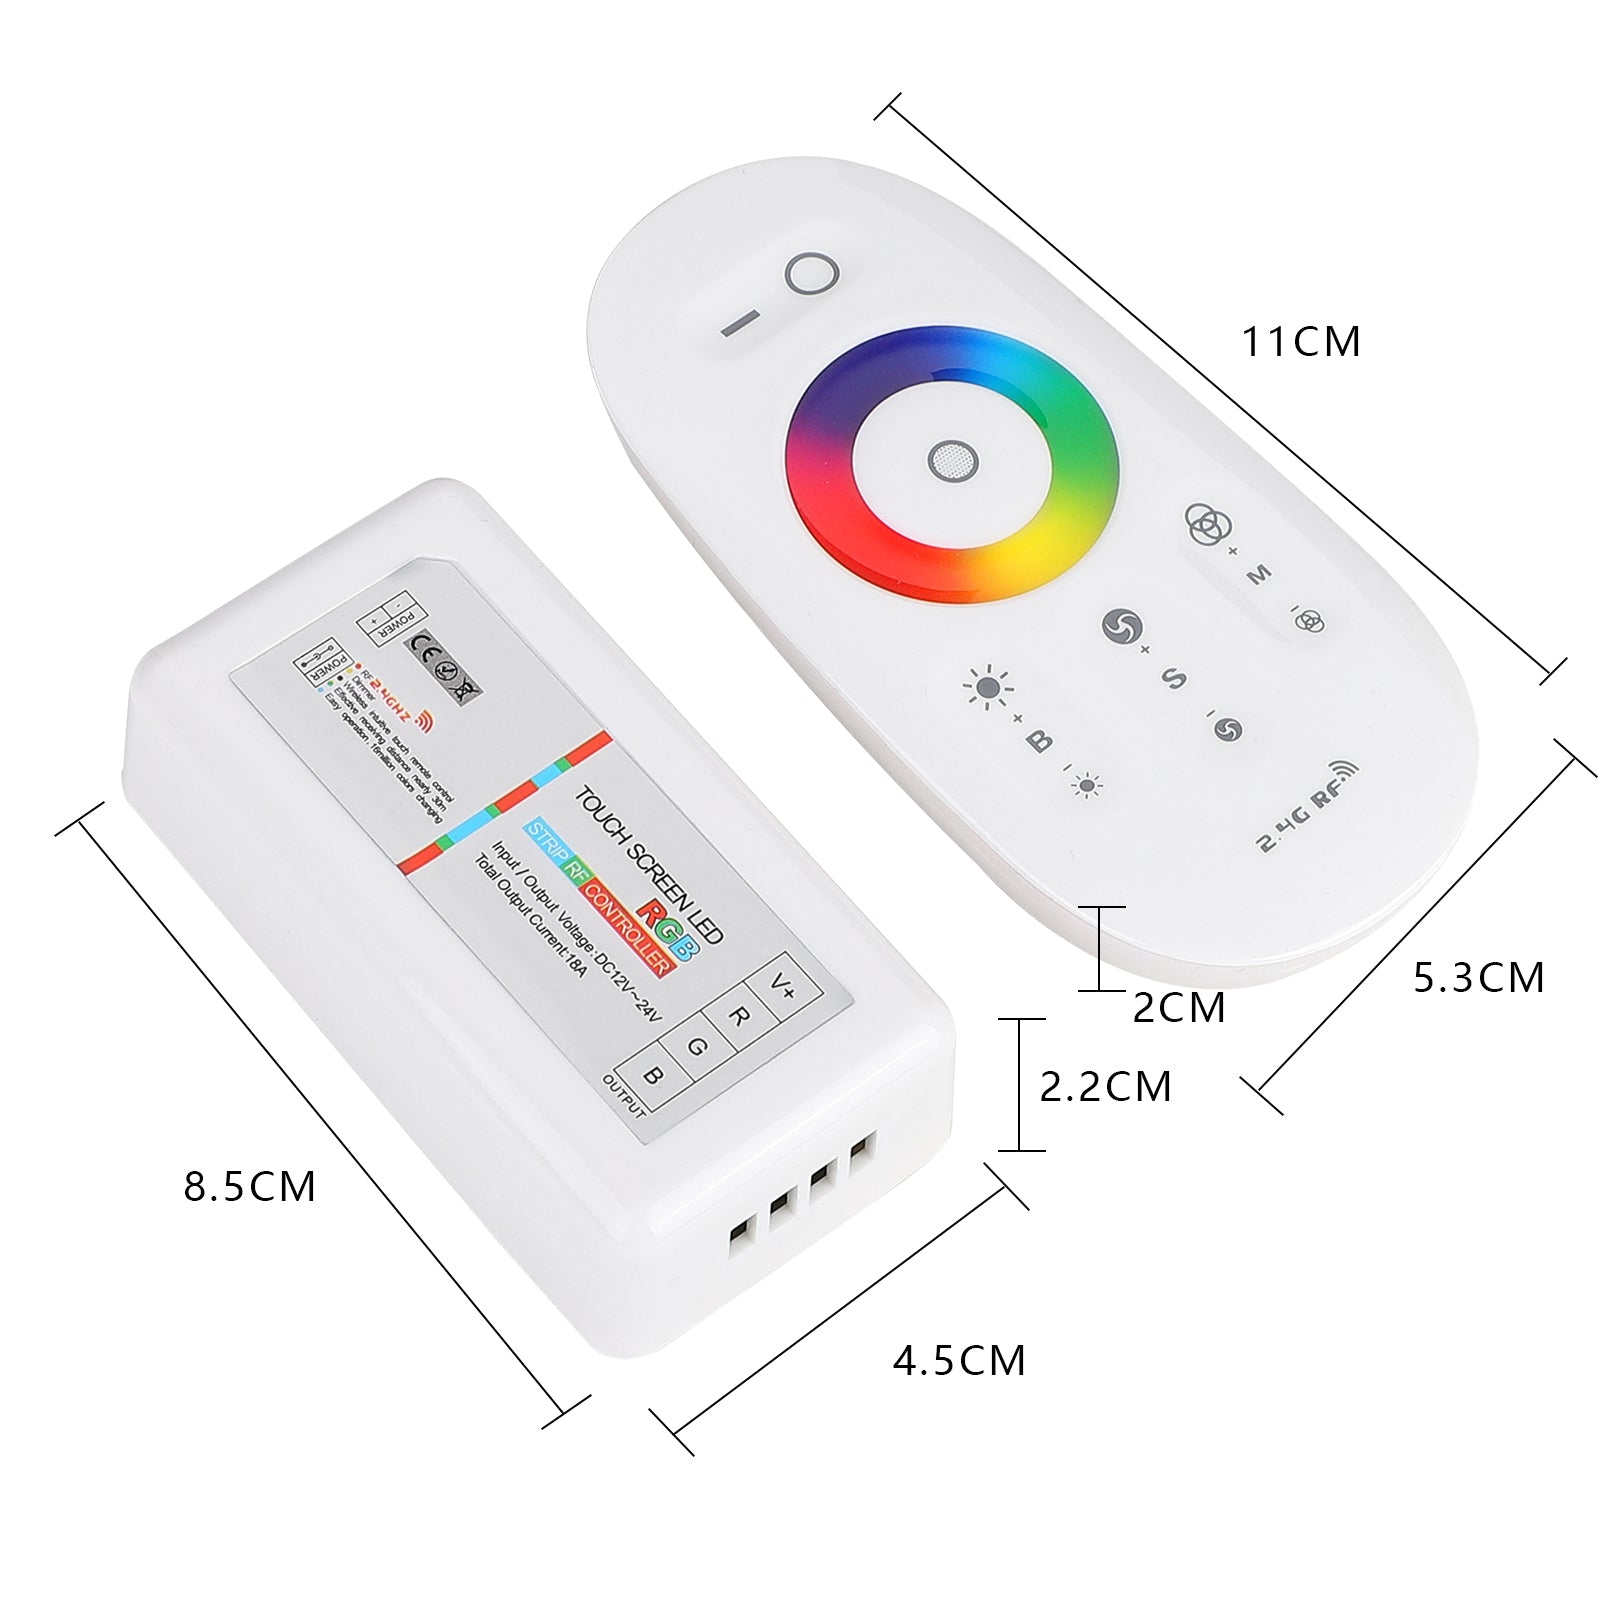 SUPERNIGHT RF LED Remote Controller, 2.4GHz Wireless RF Touch LED RGB Dimmer Controller for 5050 3528 RGB LED Strip Light 12V/24V